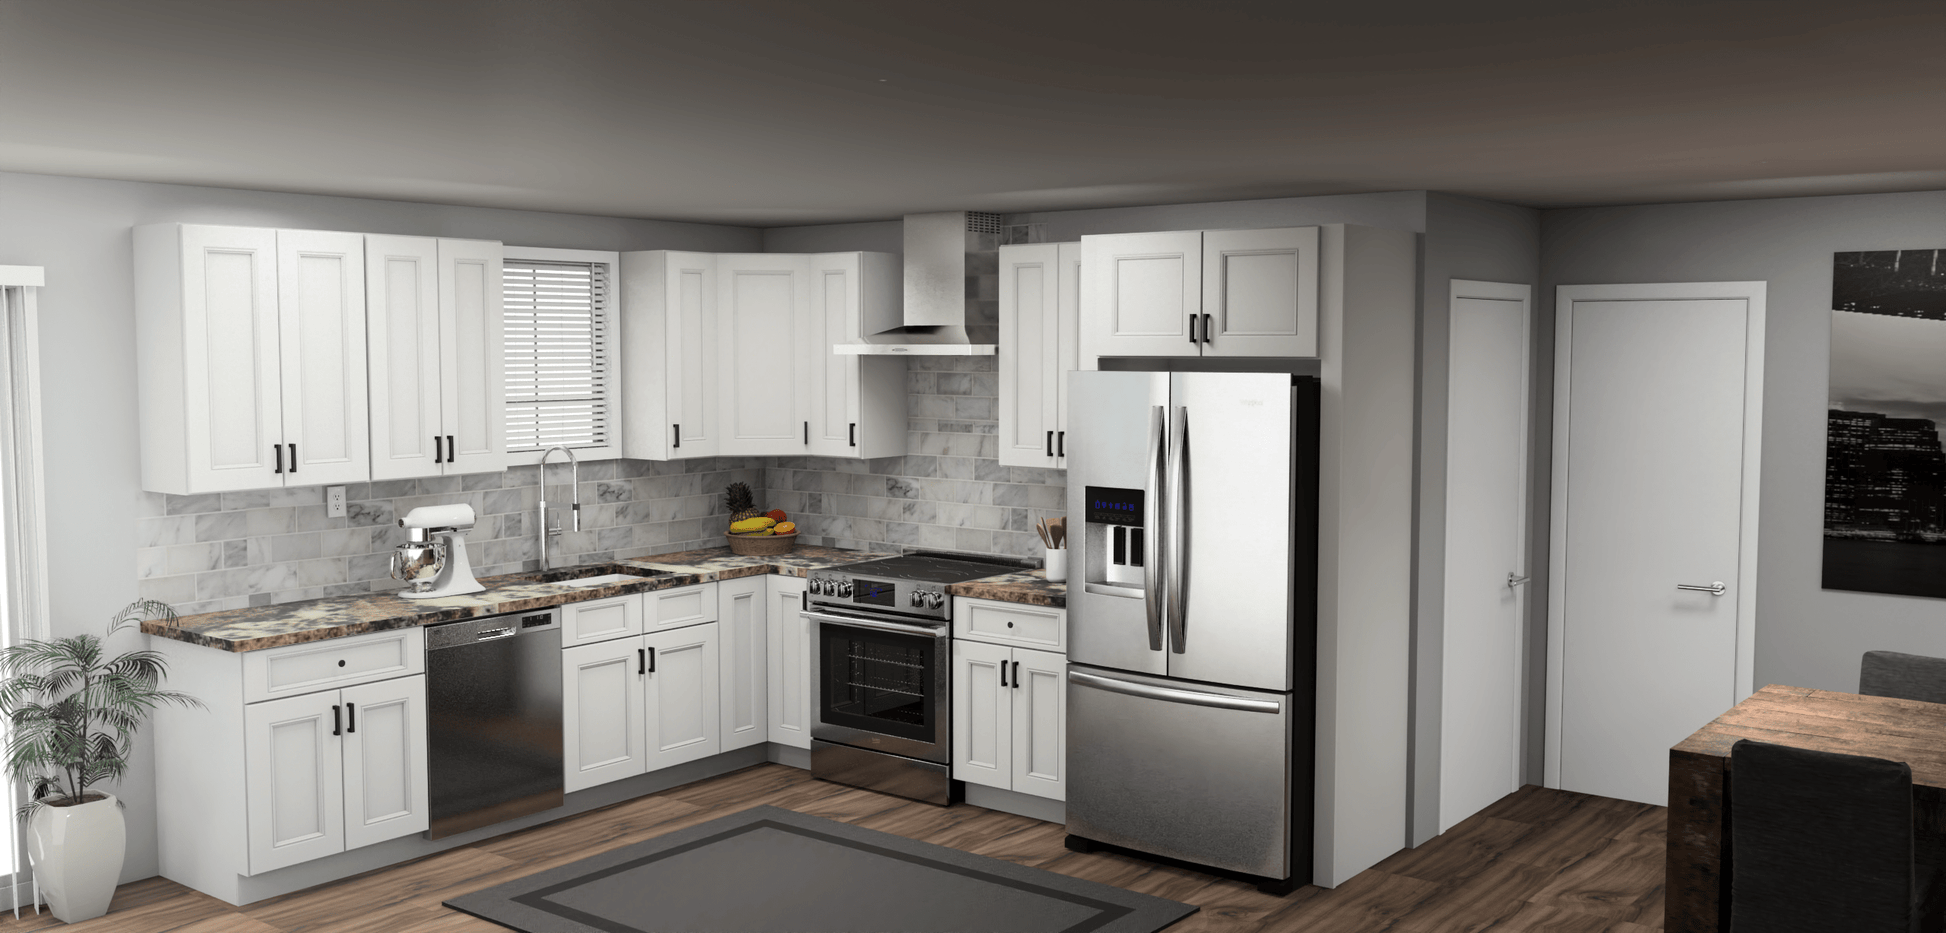 Fabuwood Allure Nexus Frost 10 x 11 L Shaped Kitchen Main Layout Photo